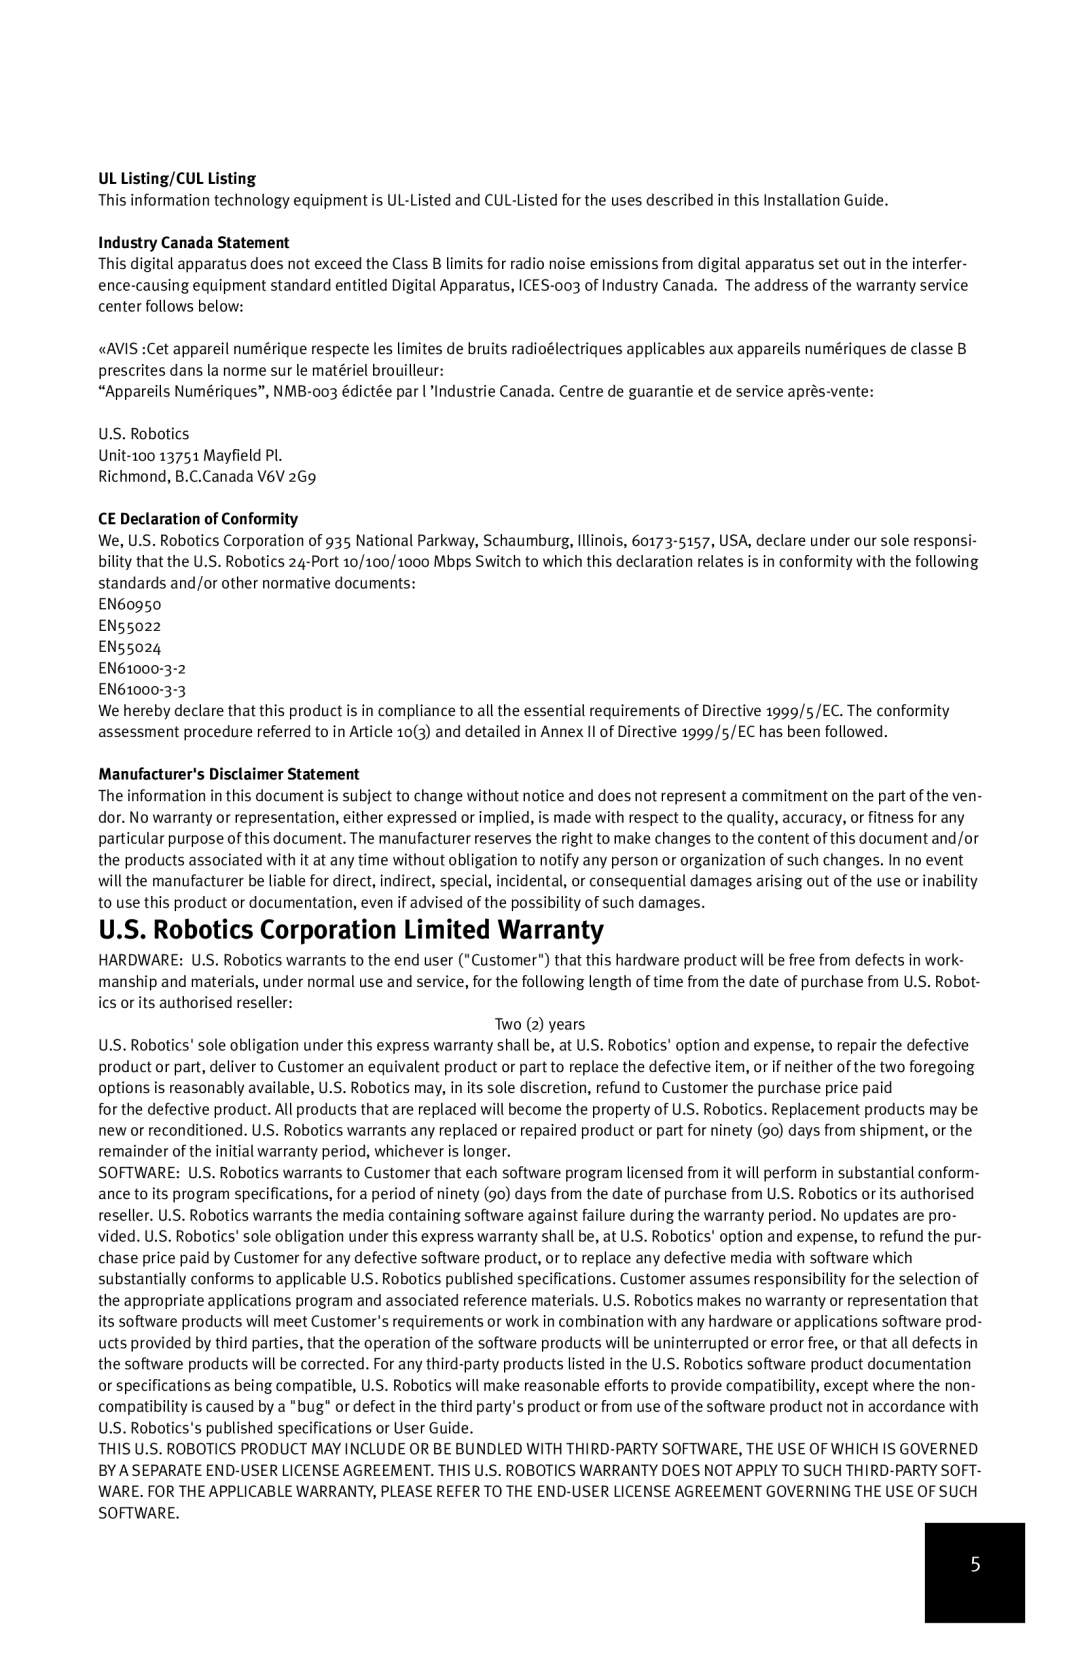 USRobotics 7931 manual Robotics Corporation Limited Warranty, UL Listing/CUL Listing, Industry Canada Statement 